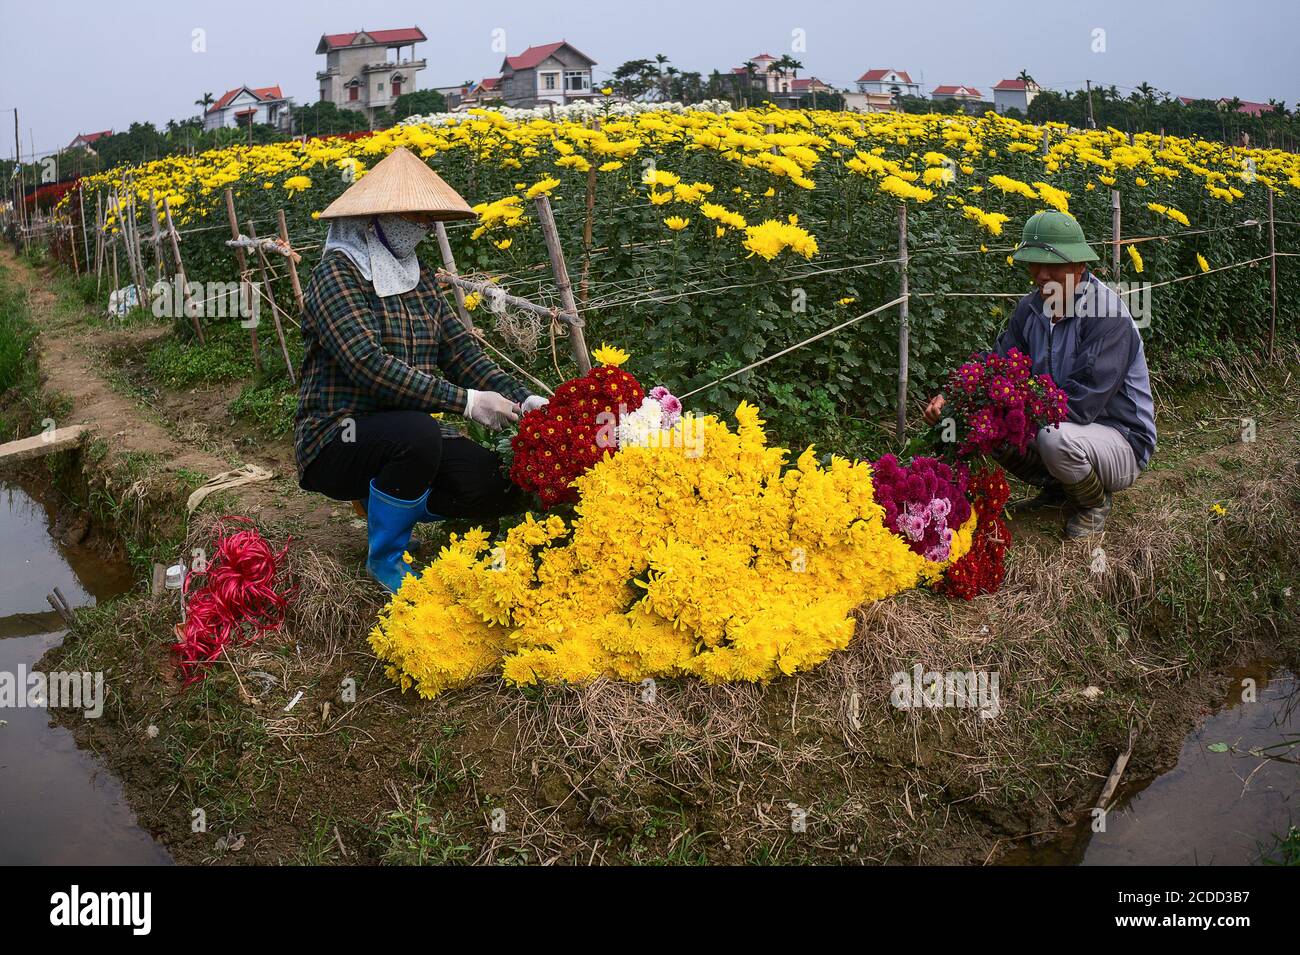 Nhat Tan flower garden, suburban Ha Noi, Vietnam Stock Photo